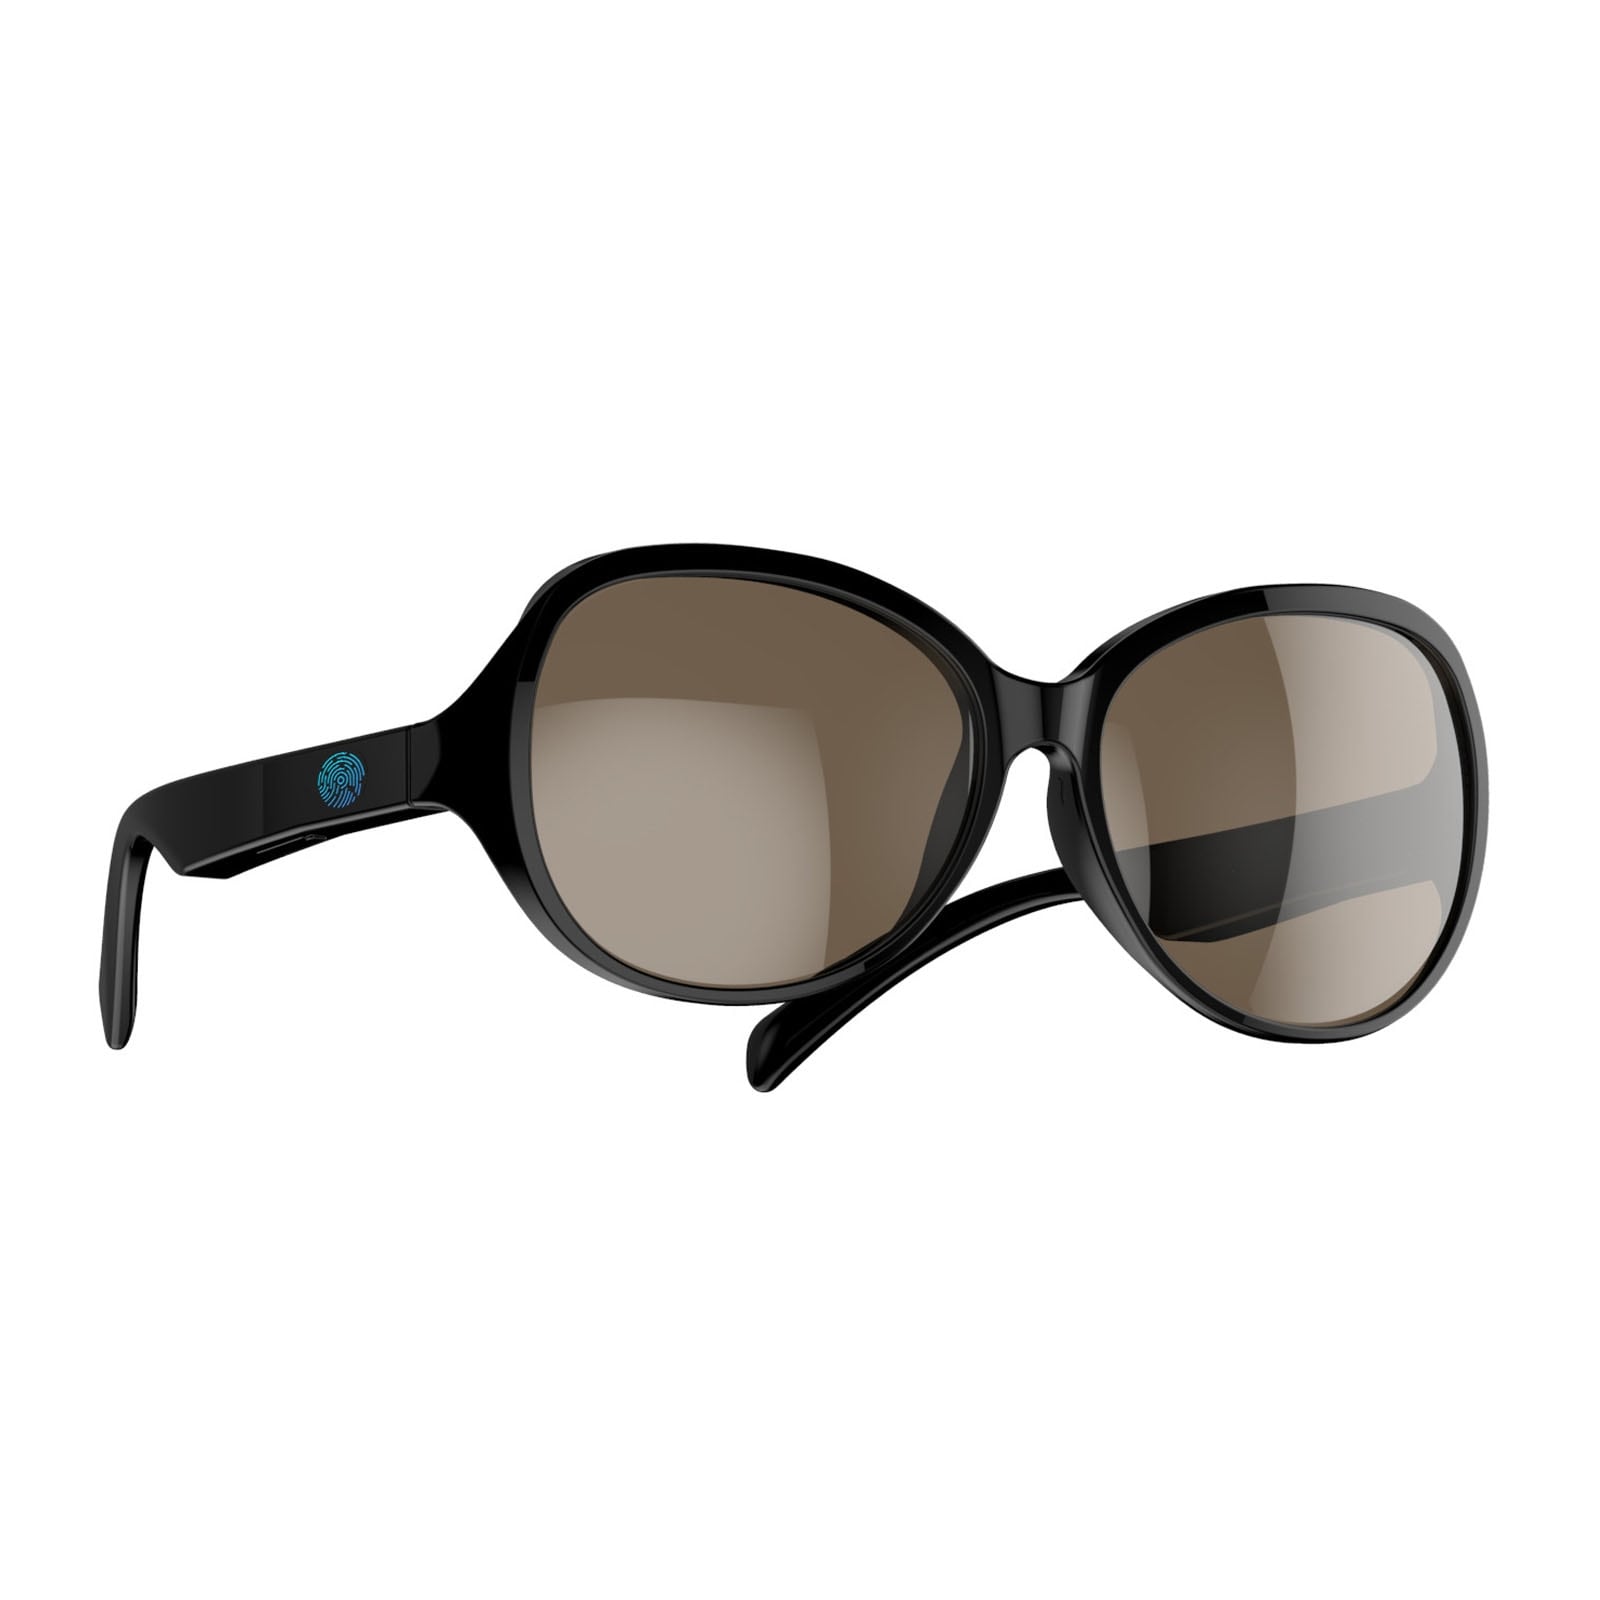 Solbriller med innebygd Bluetooth-headset